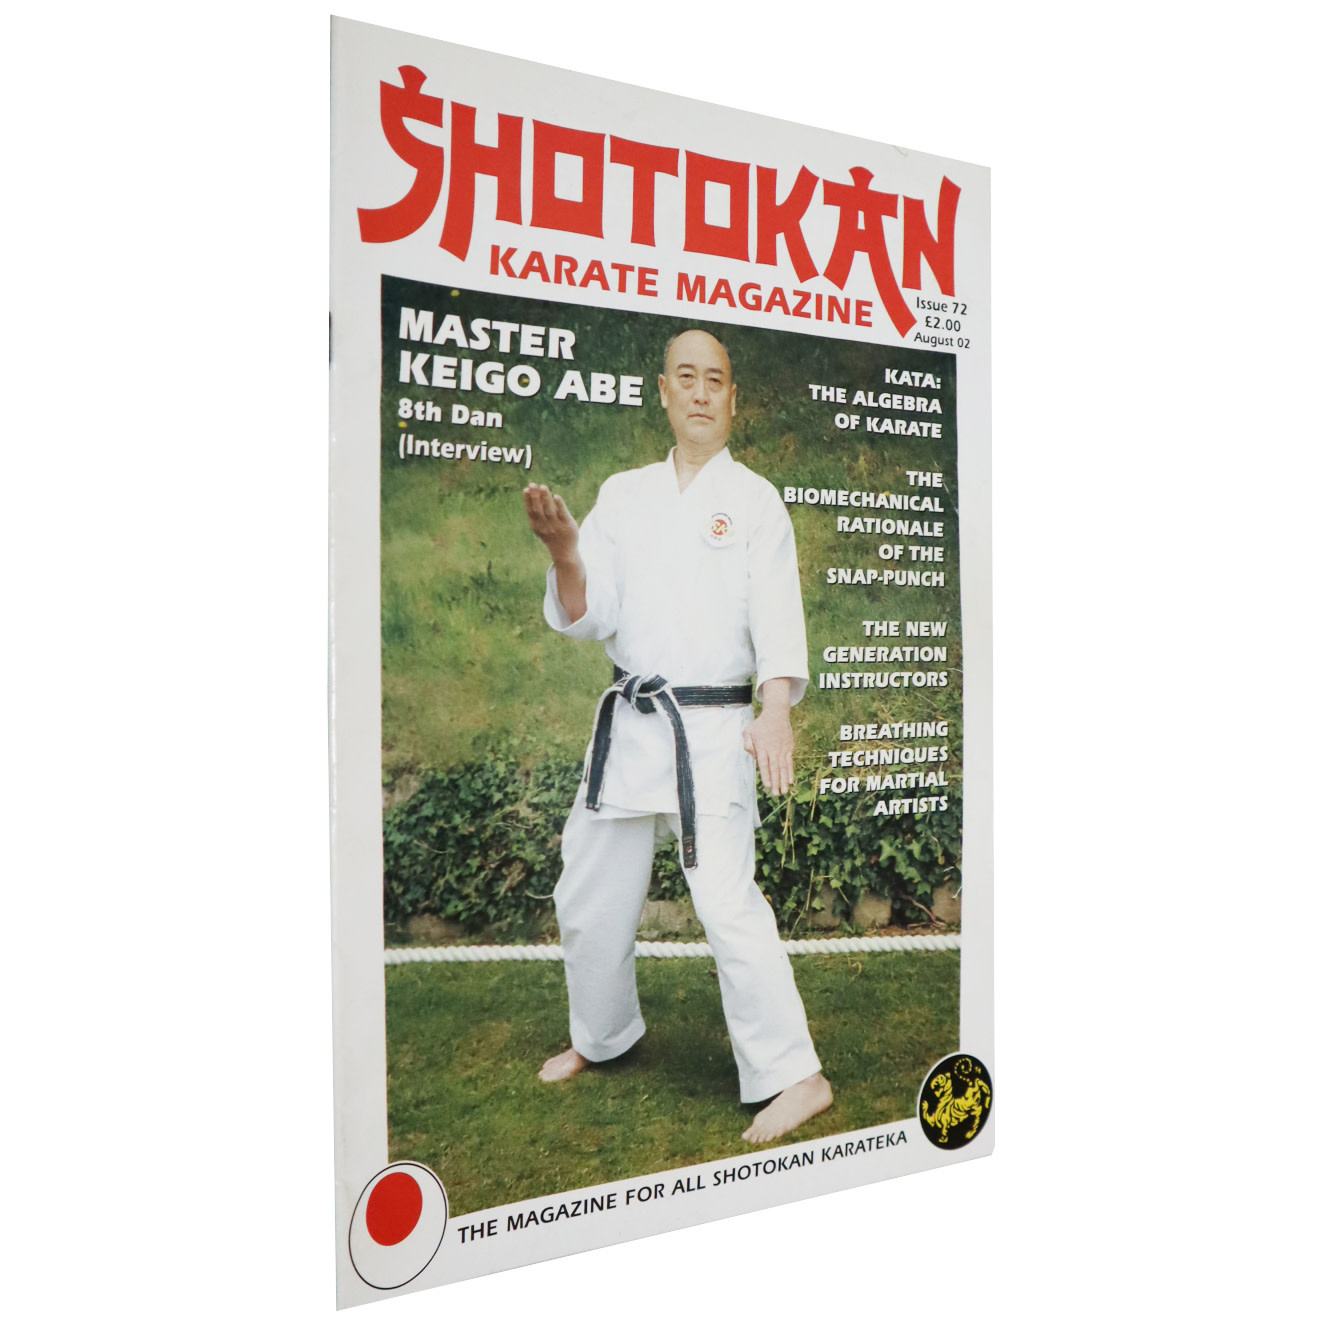 Shotokan Karate Magazine Issue 72 Enso Martial Arts Shop Bristol 